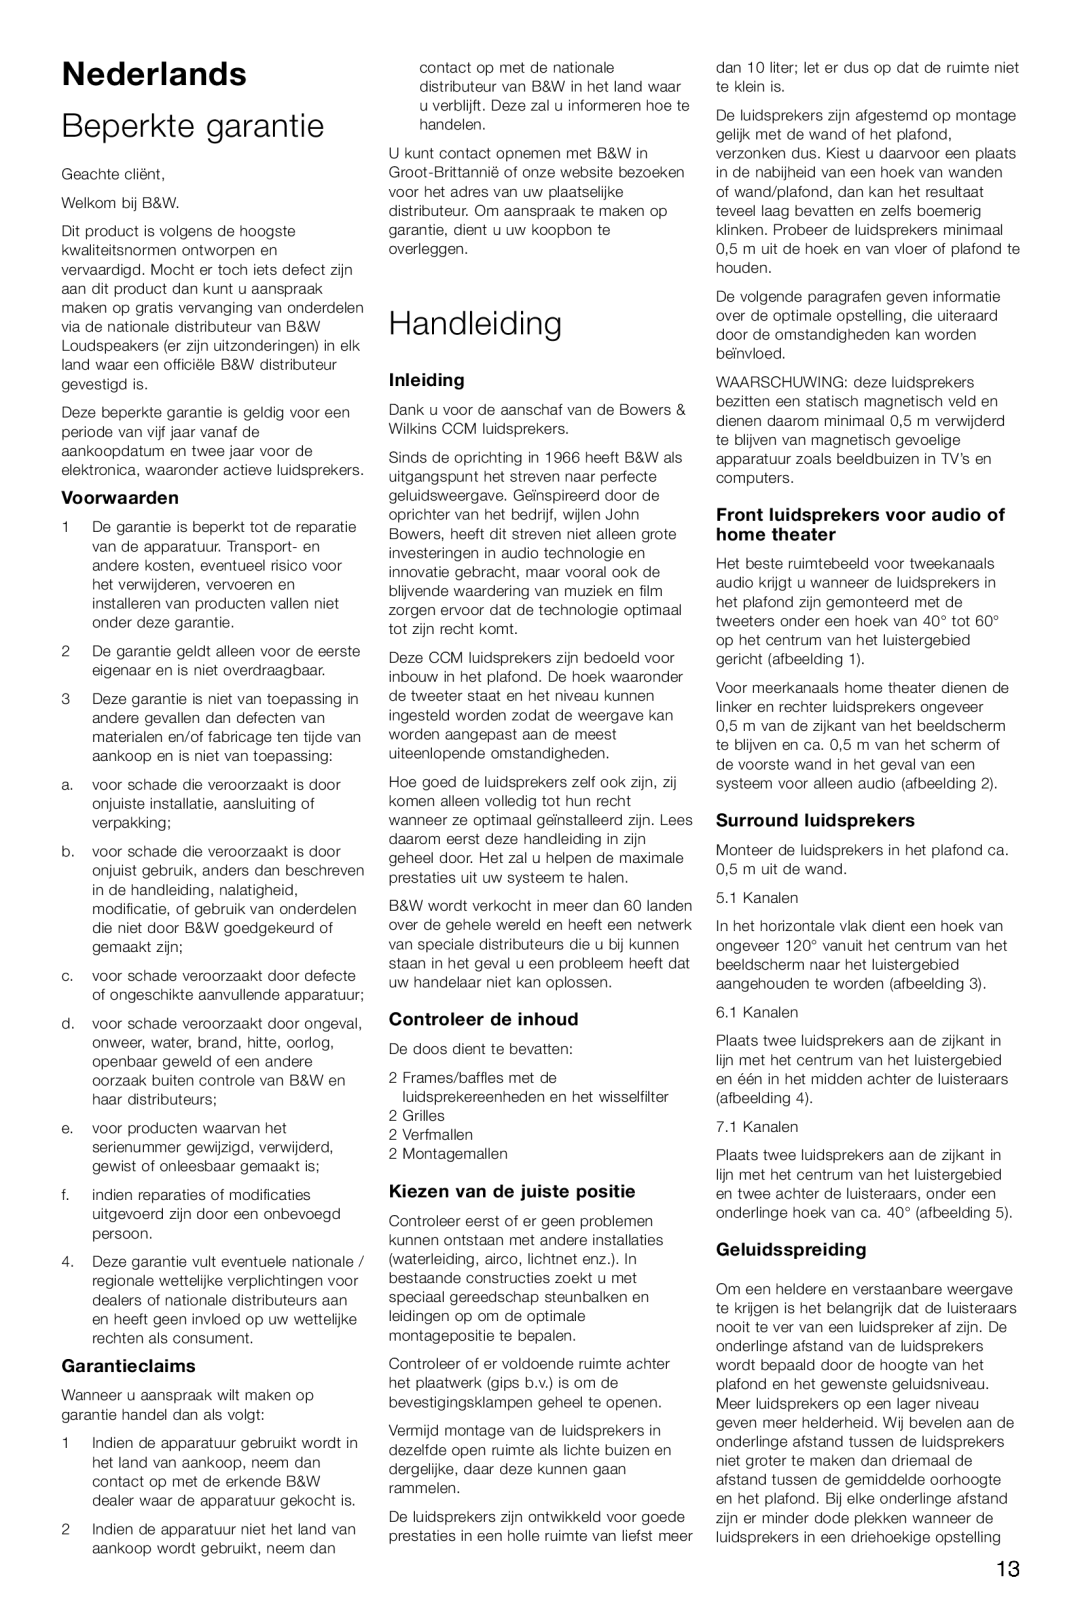 Bowers & Wilkins CCM-628 owner manual Nederlands, Beperkte garantie, Handleiding, Voorwaarden, Garantieclaims, Inleiding 